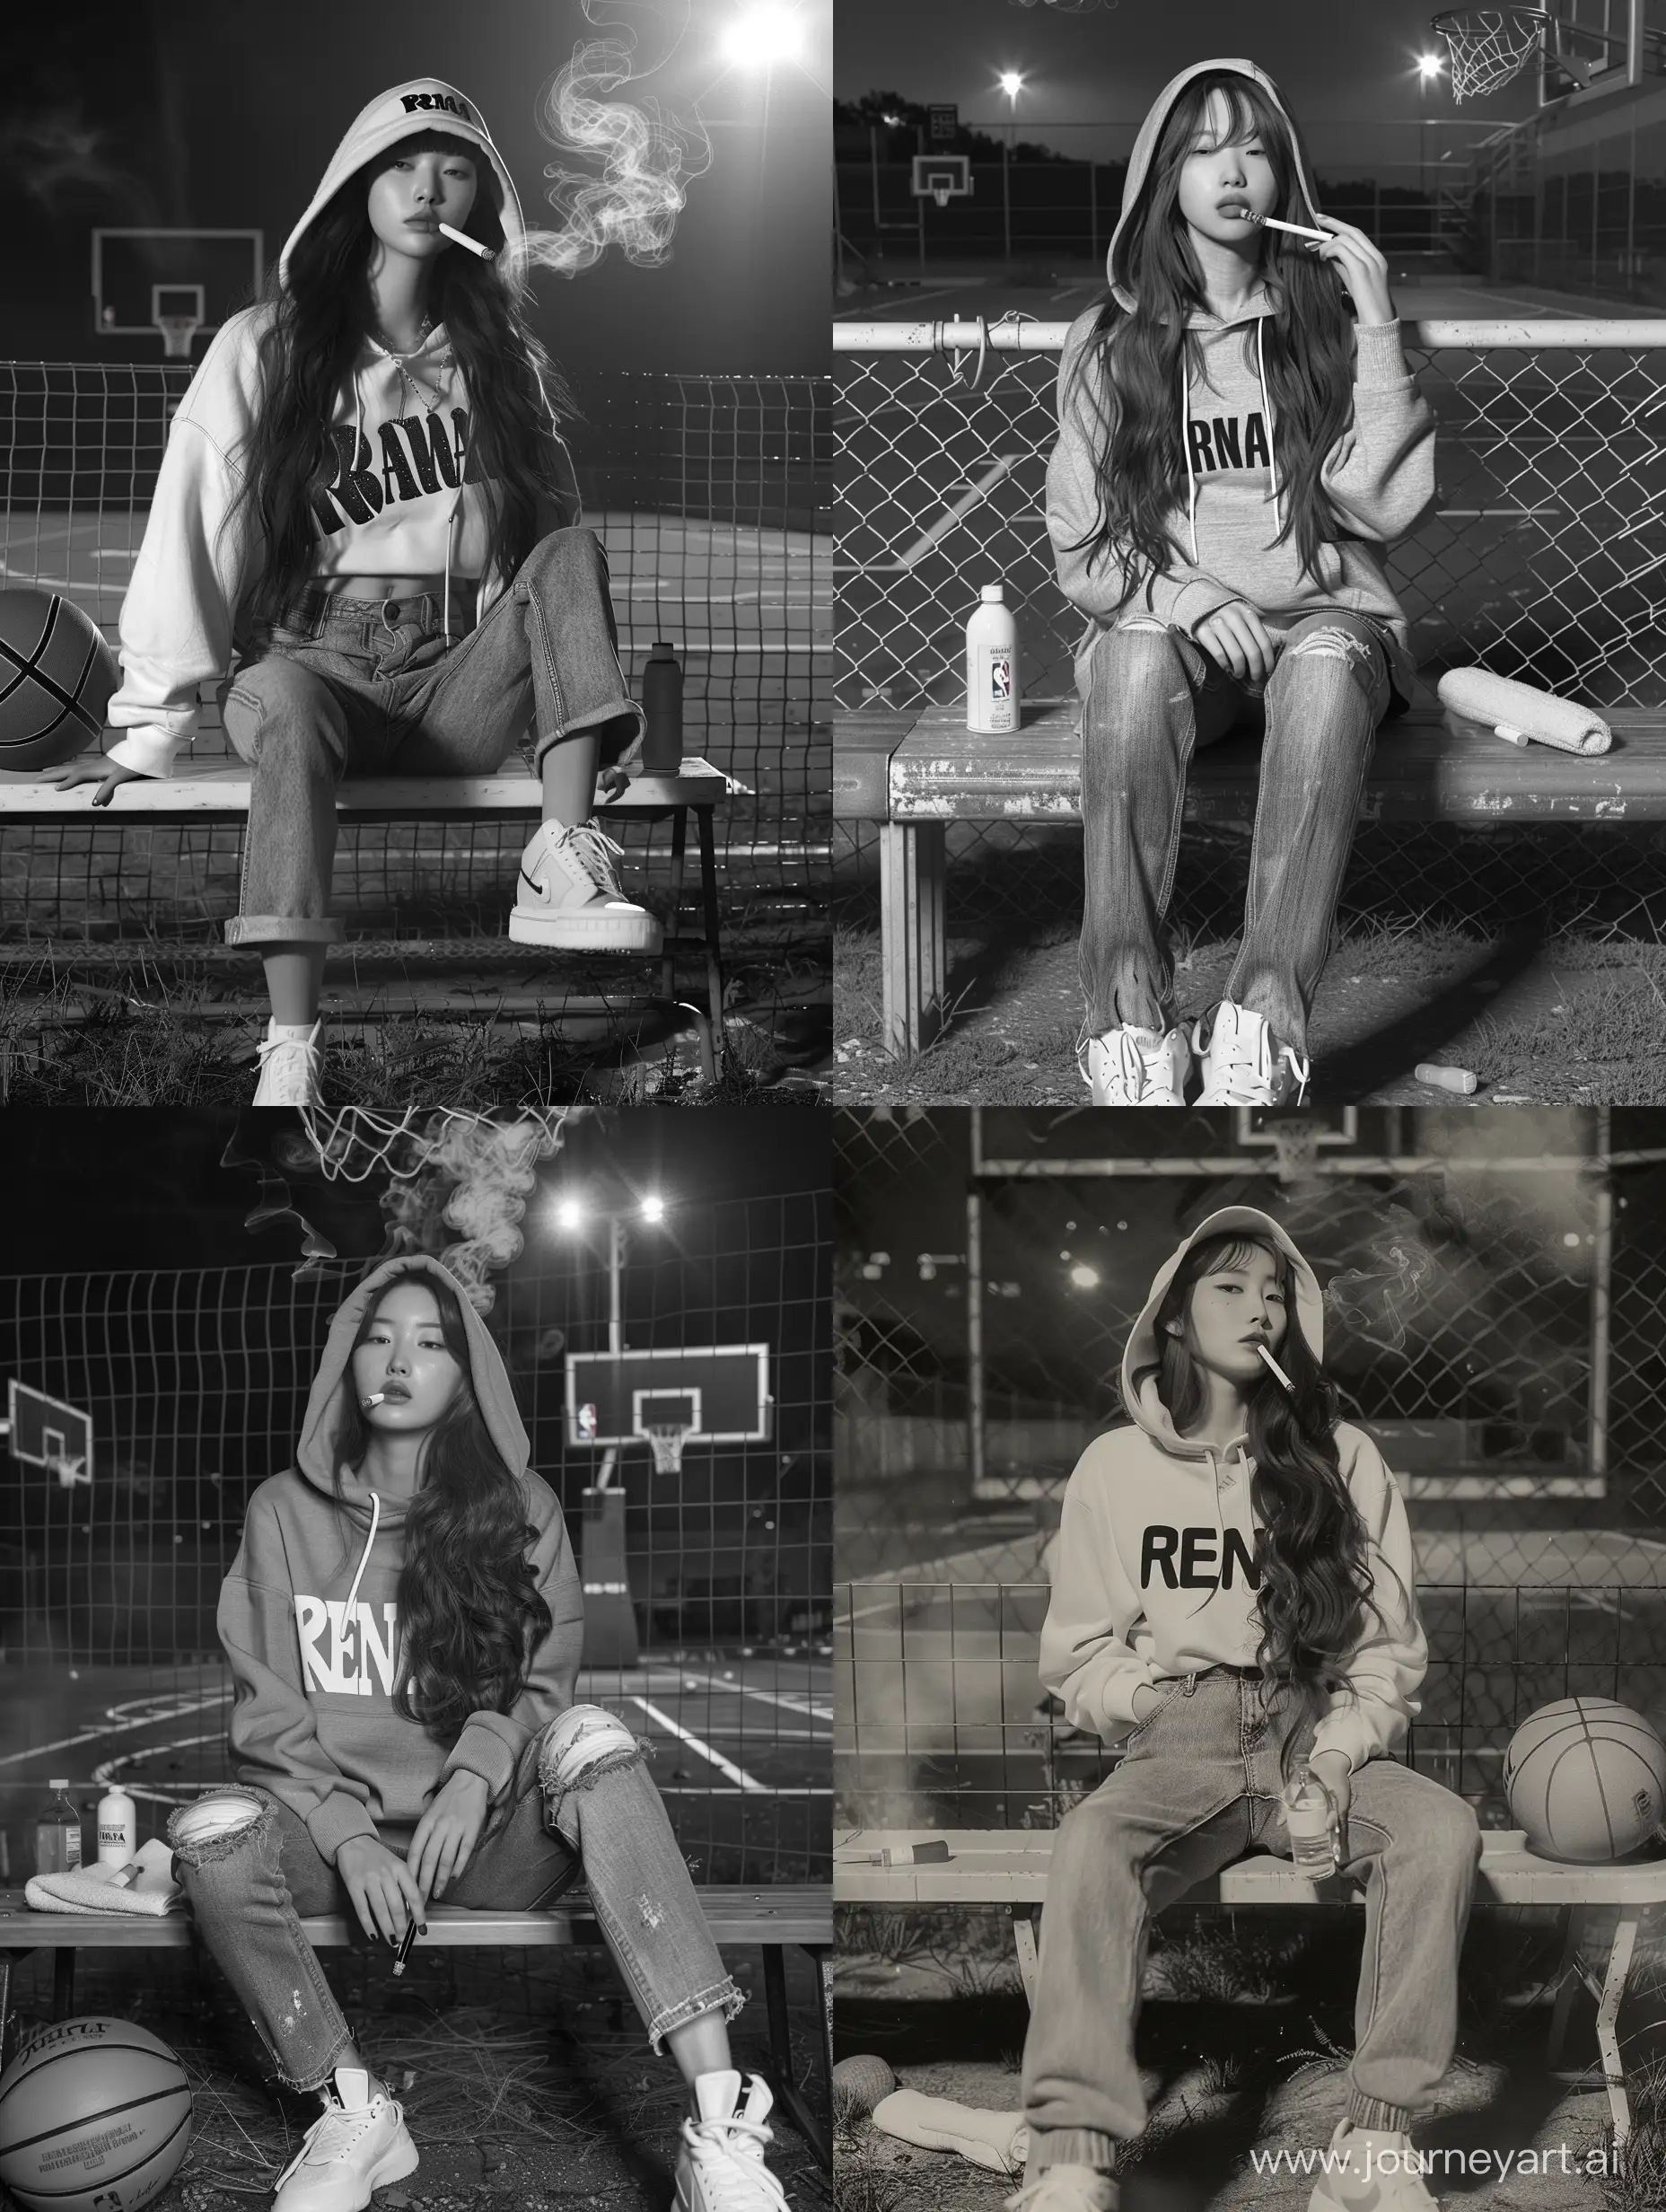 Realistic-Korean-Woman-Smoking-on-Basketball-Court-Bench-at-Night